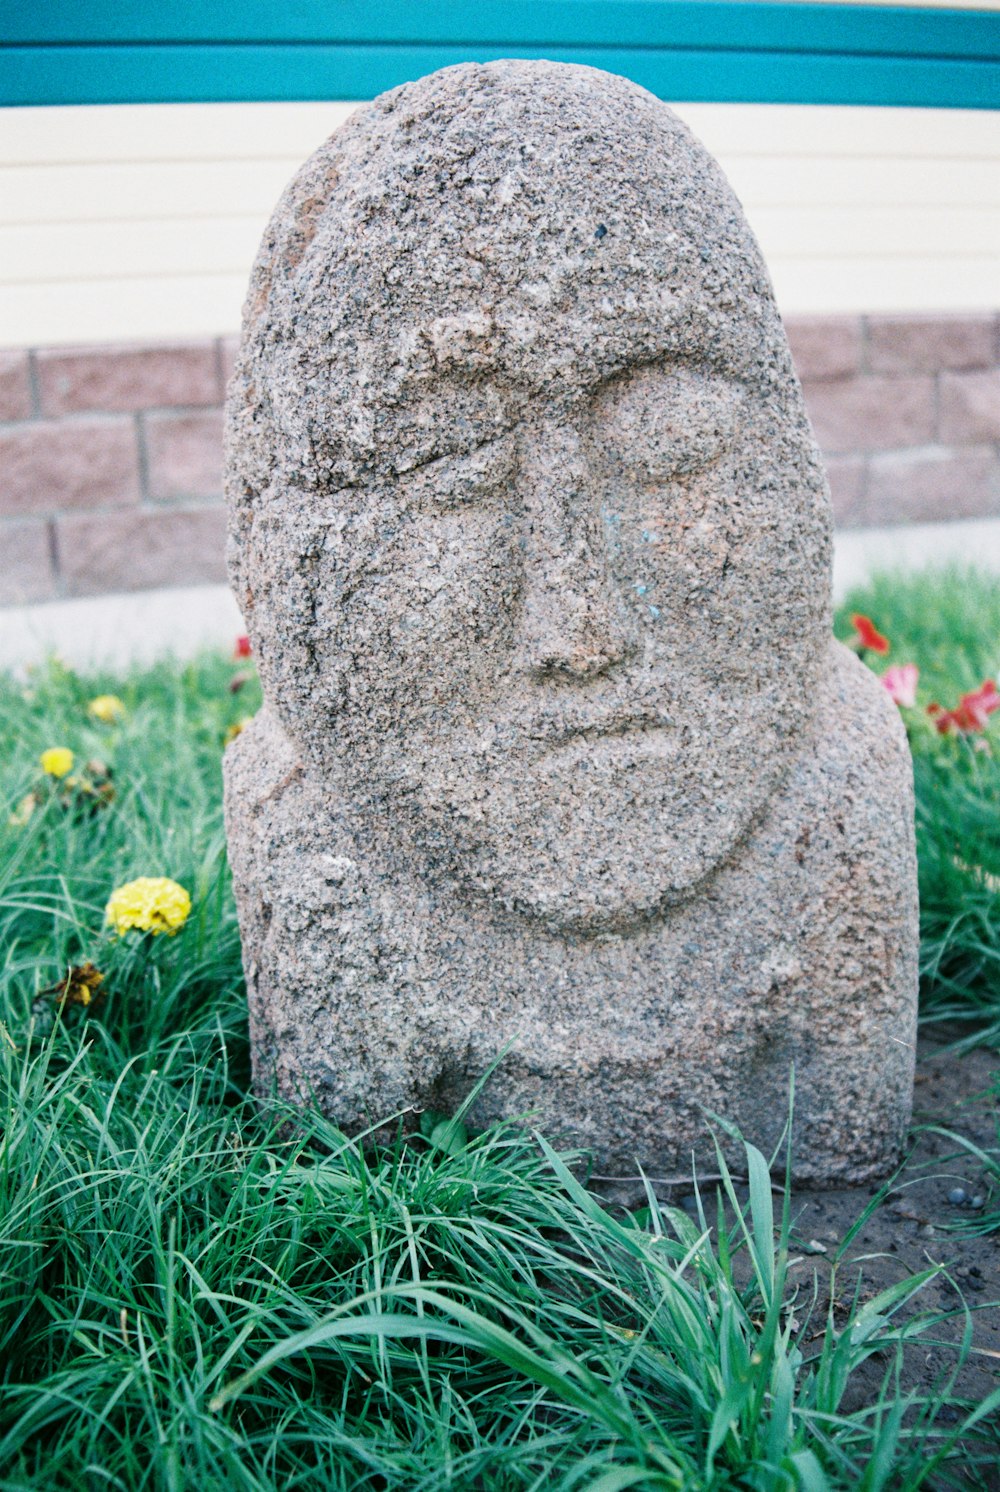 brown stone statue near yellow flower